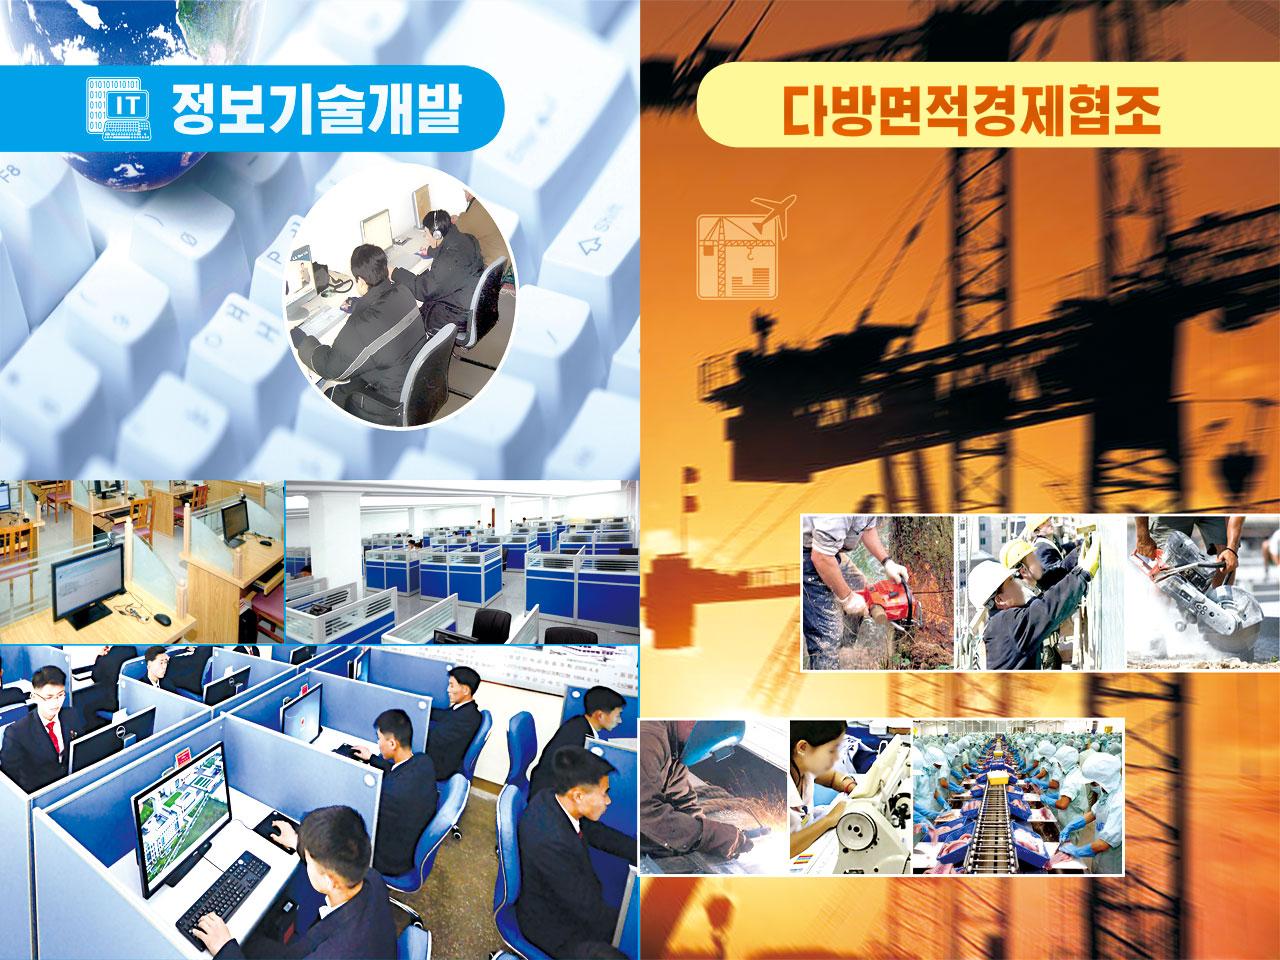 Korea Songyong Trading Corporation